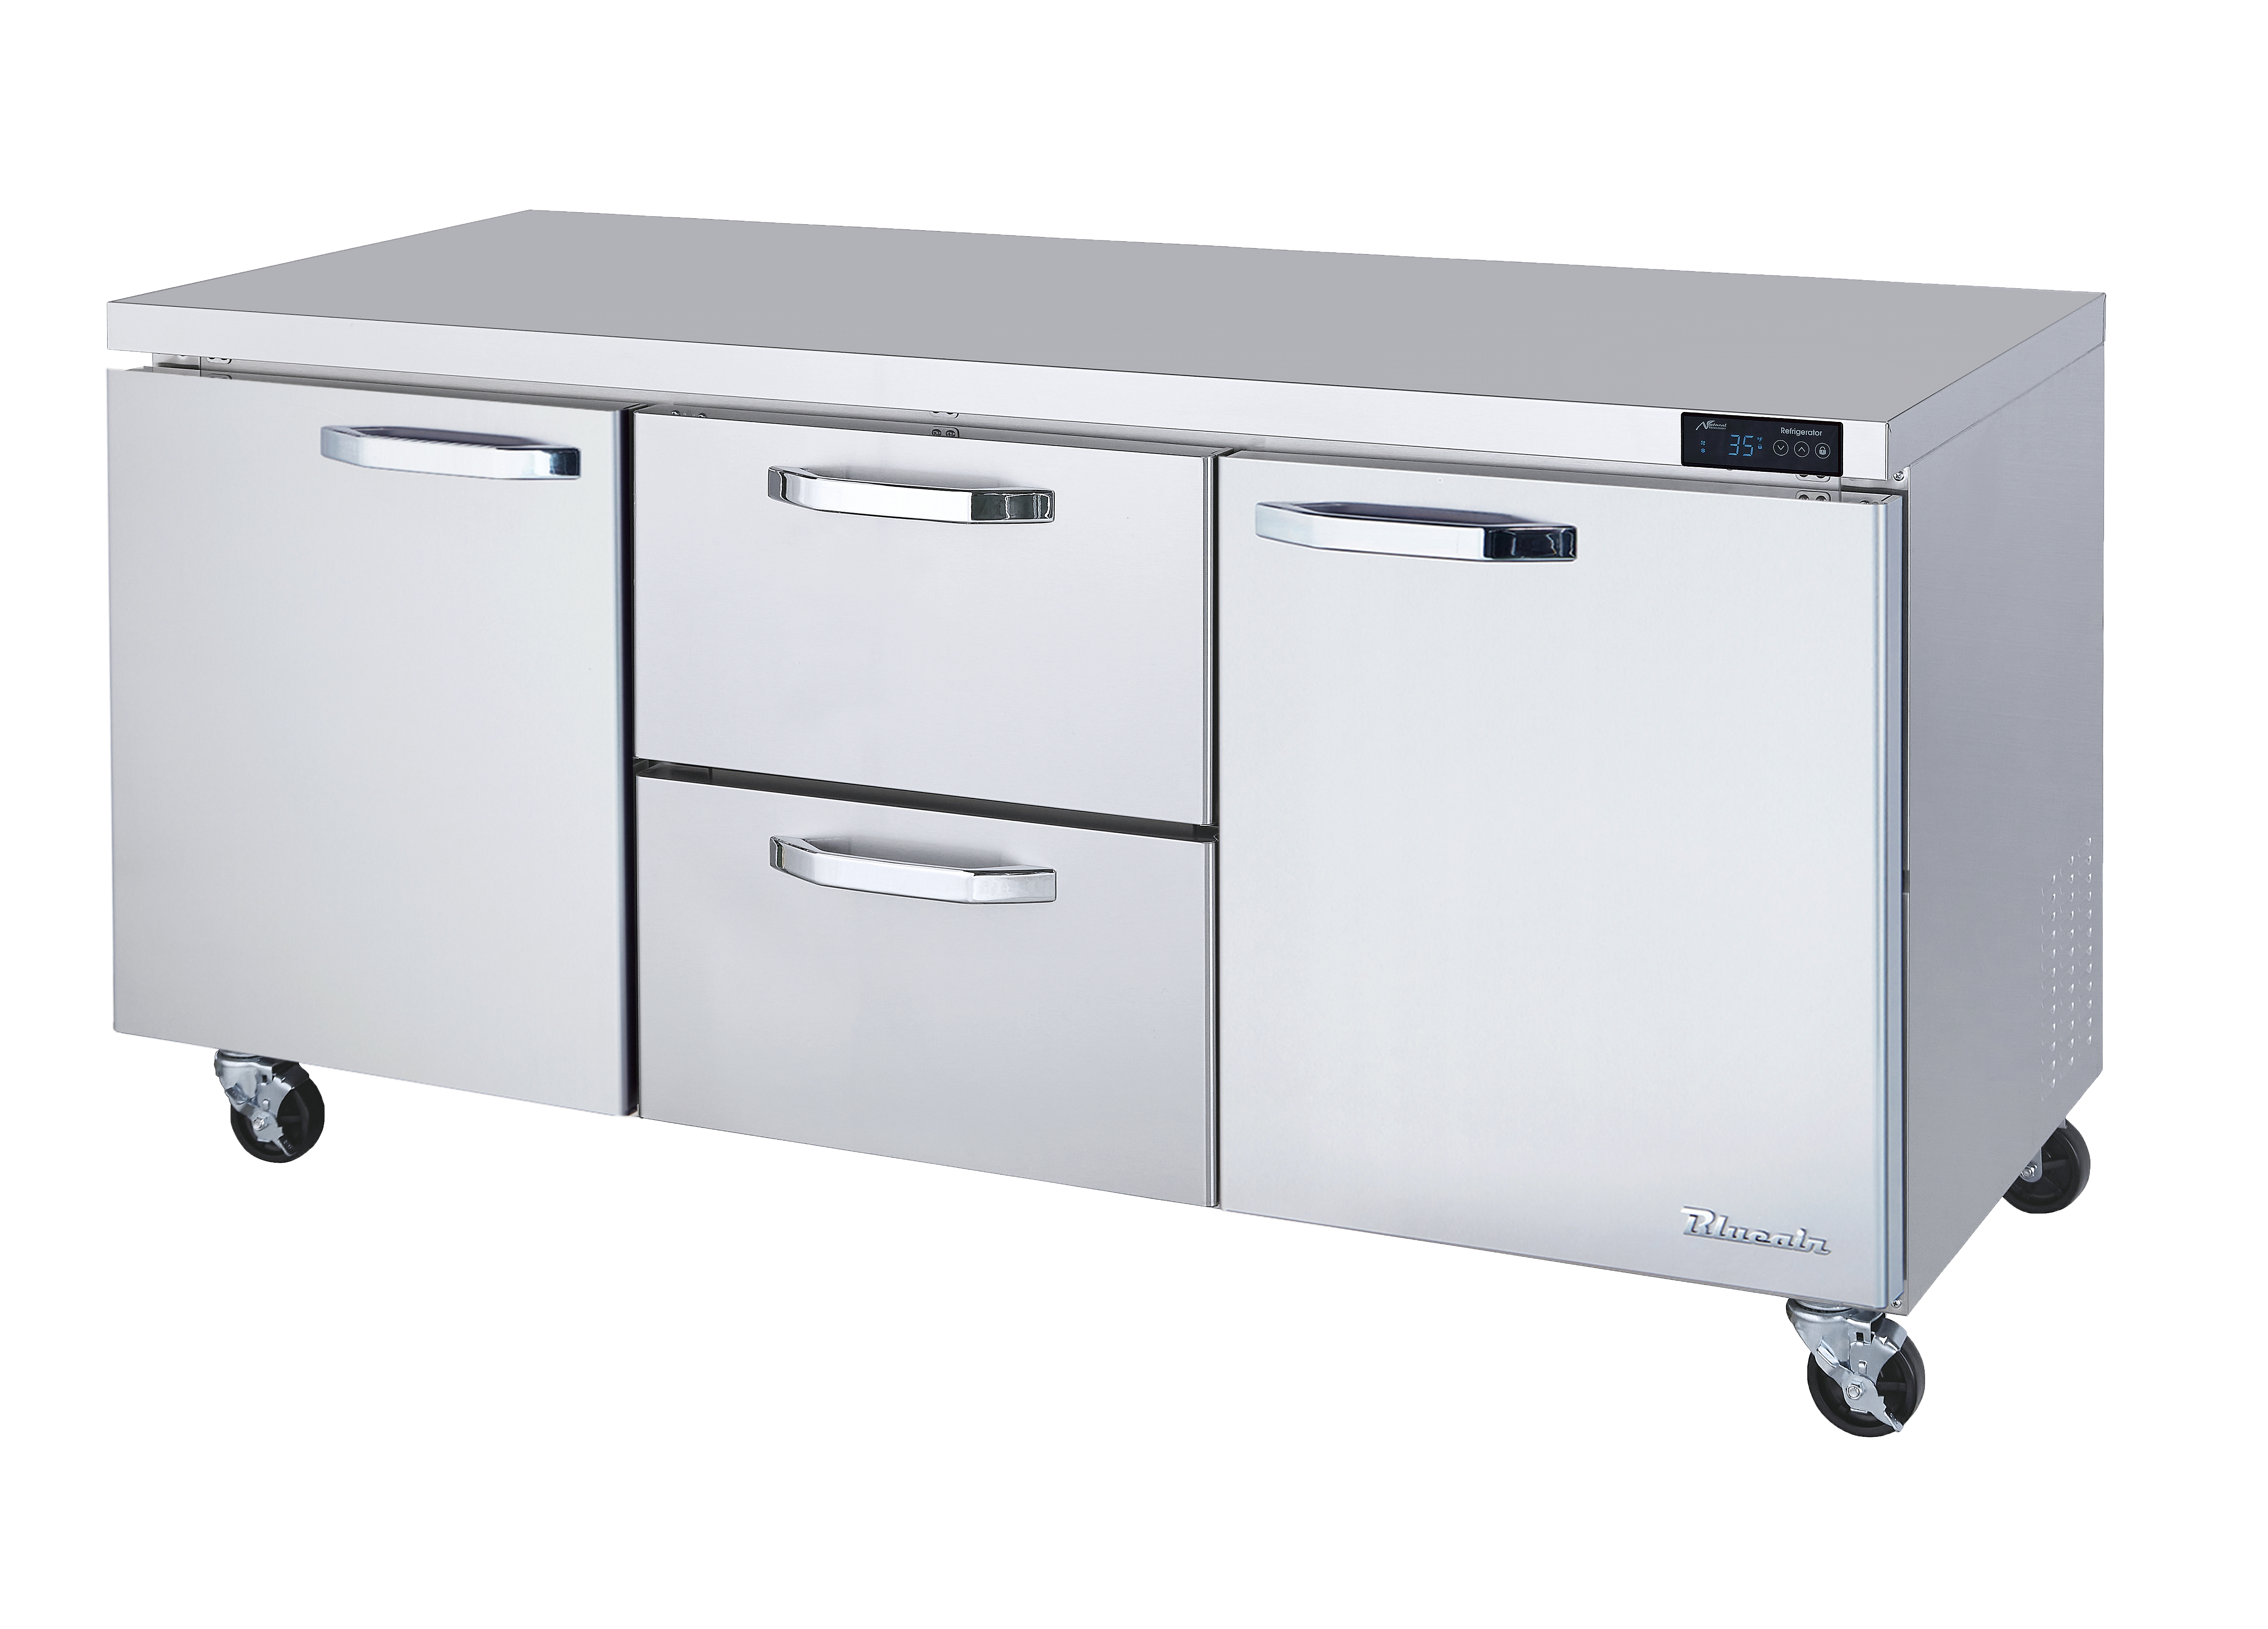 Blue Air - BLUR72-D2M-HC, 2 Drawers 2 Doors (L, R) All Stainless Undercounter Refrigerator - 72" wide, 20 cu/ft, R-290 Refrigerant